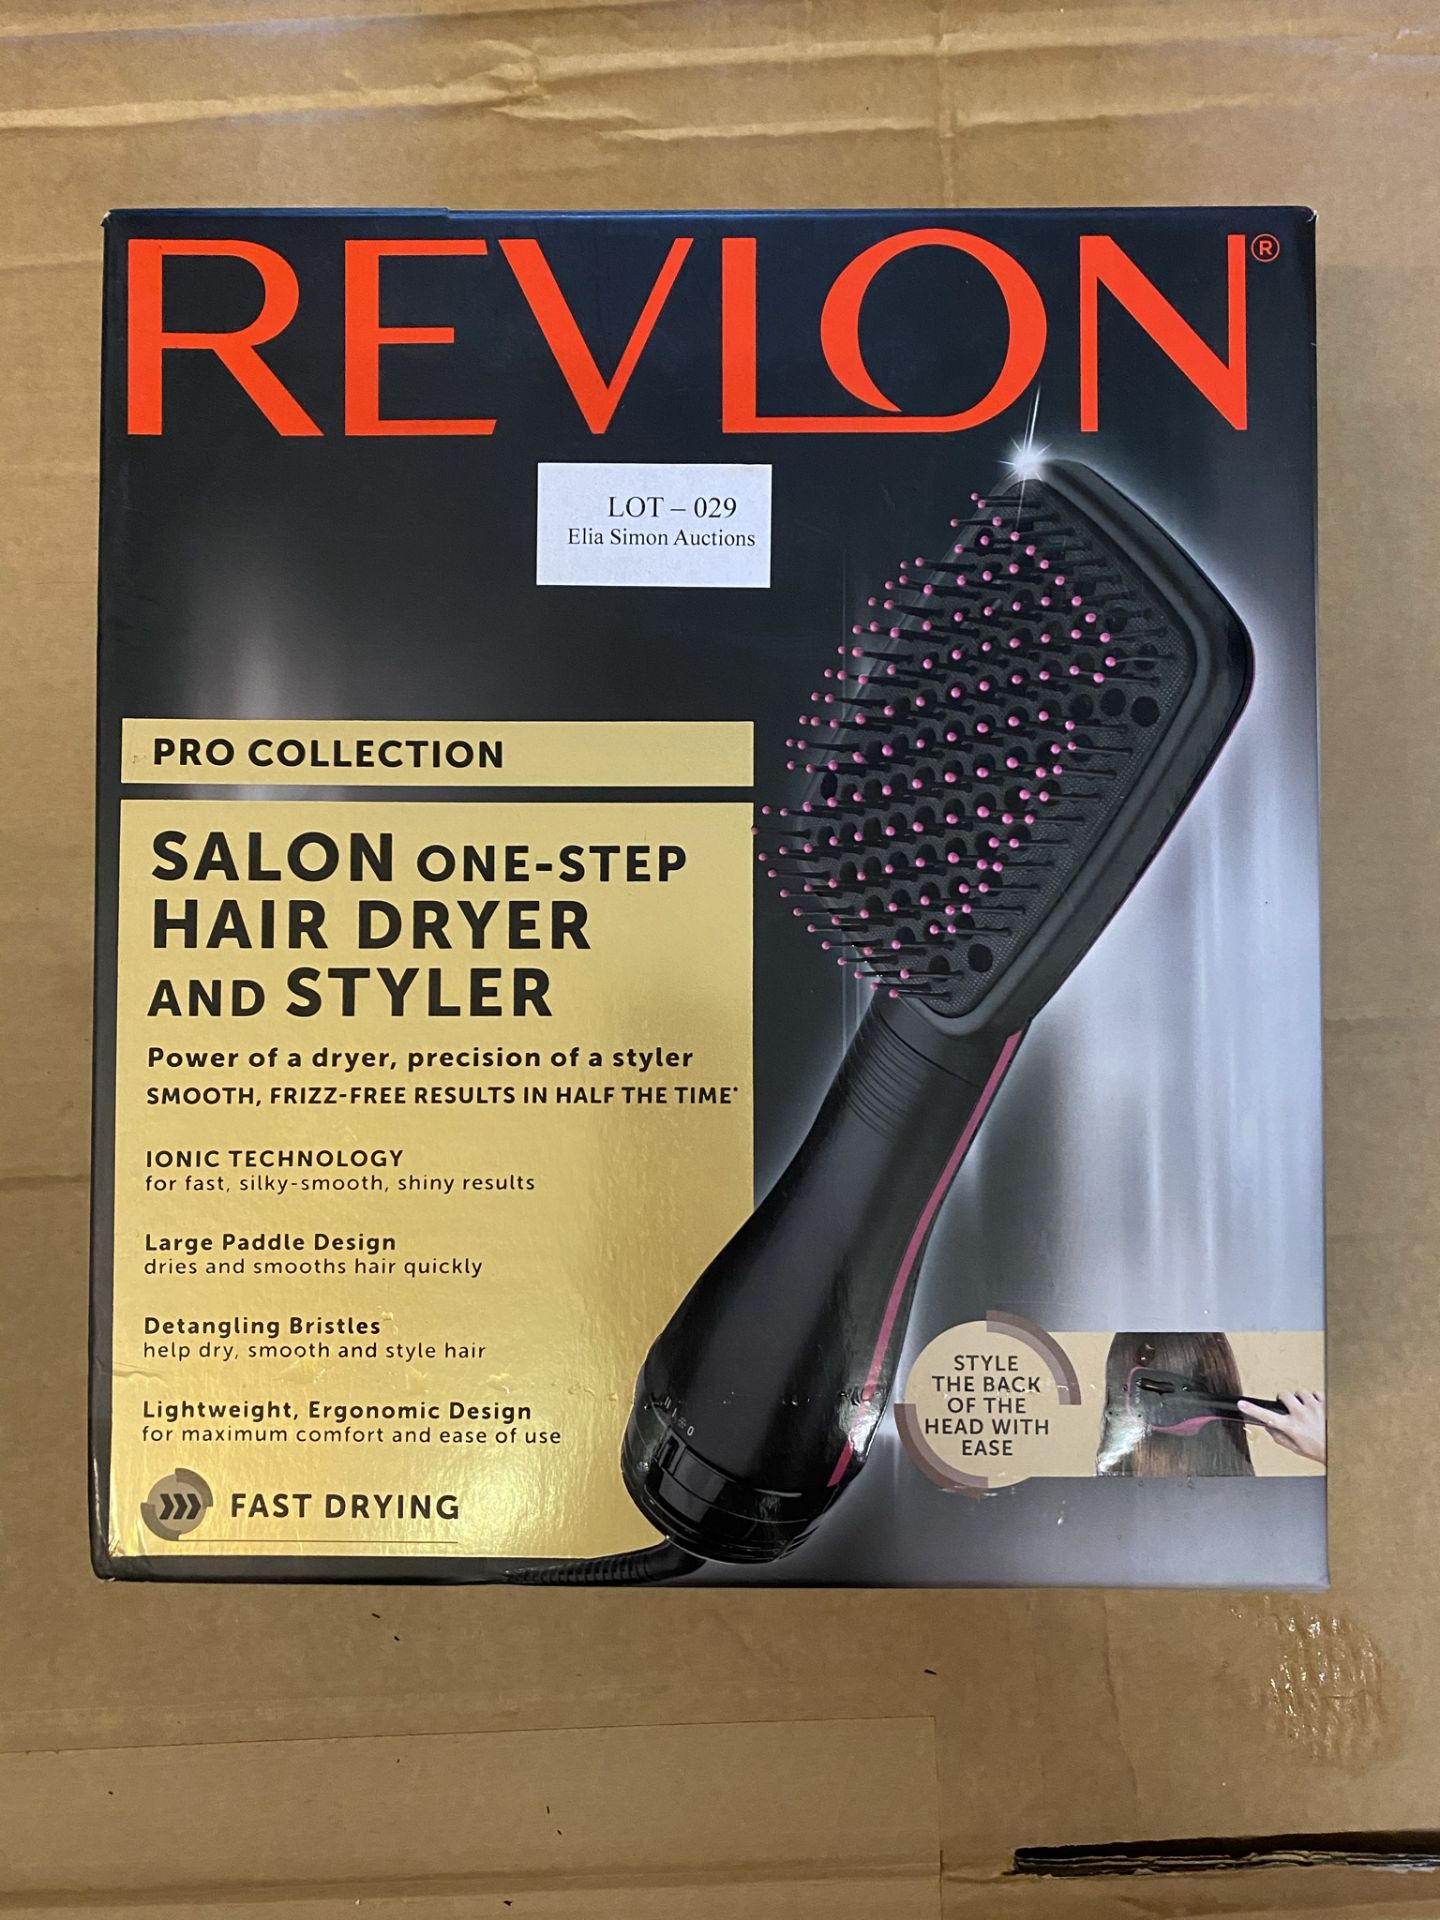 REVLON PRO COLLECITON SALON ONE-STEP HAIR DRYER AND STYLER